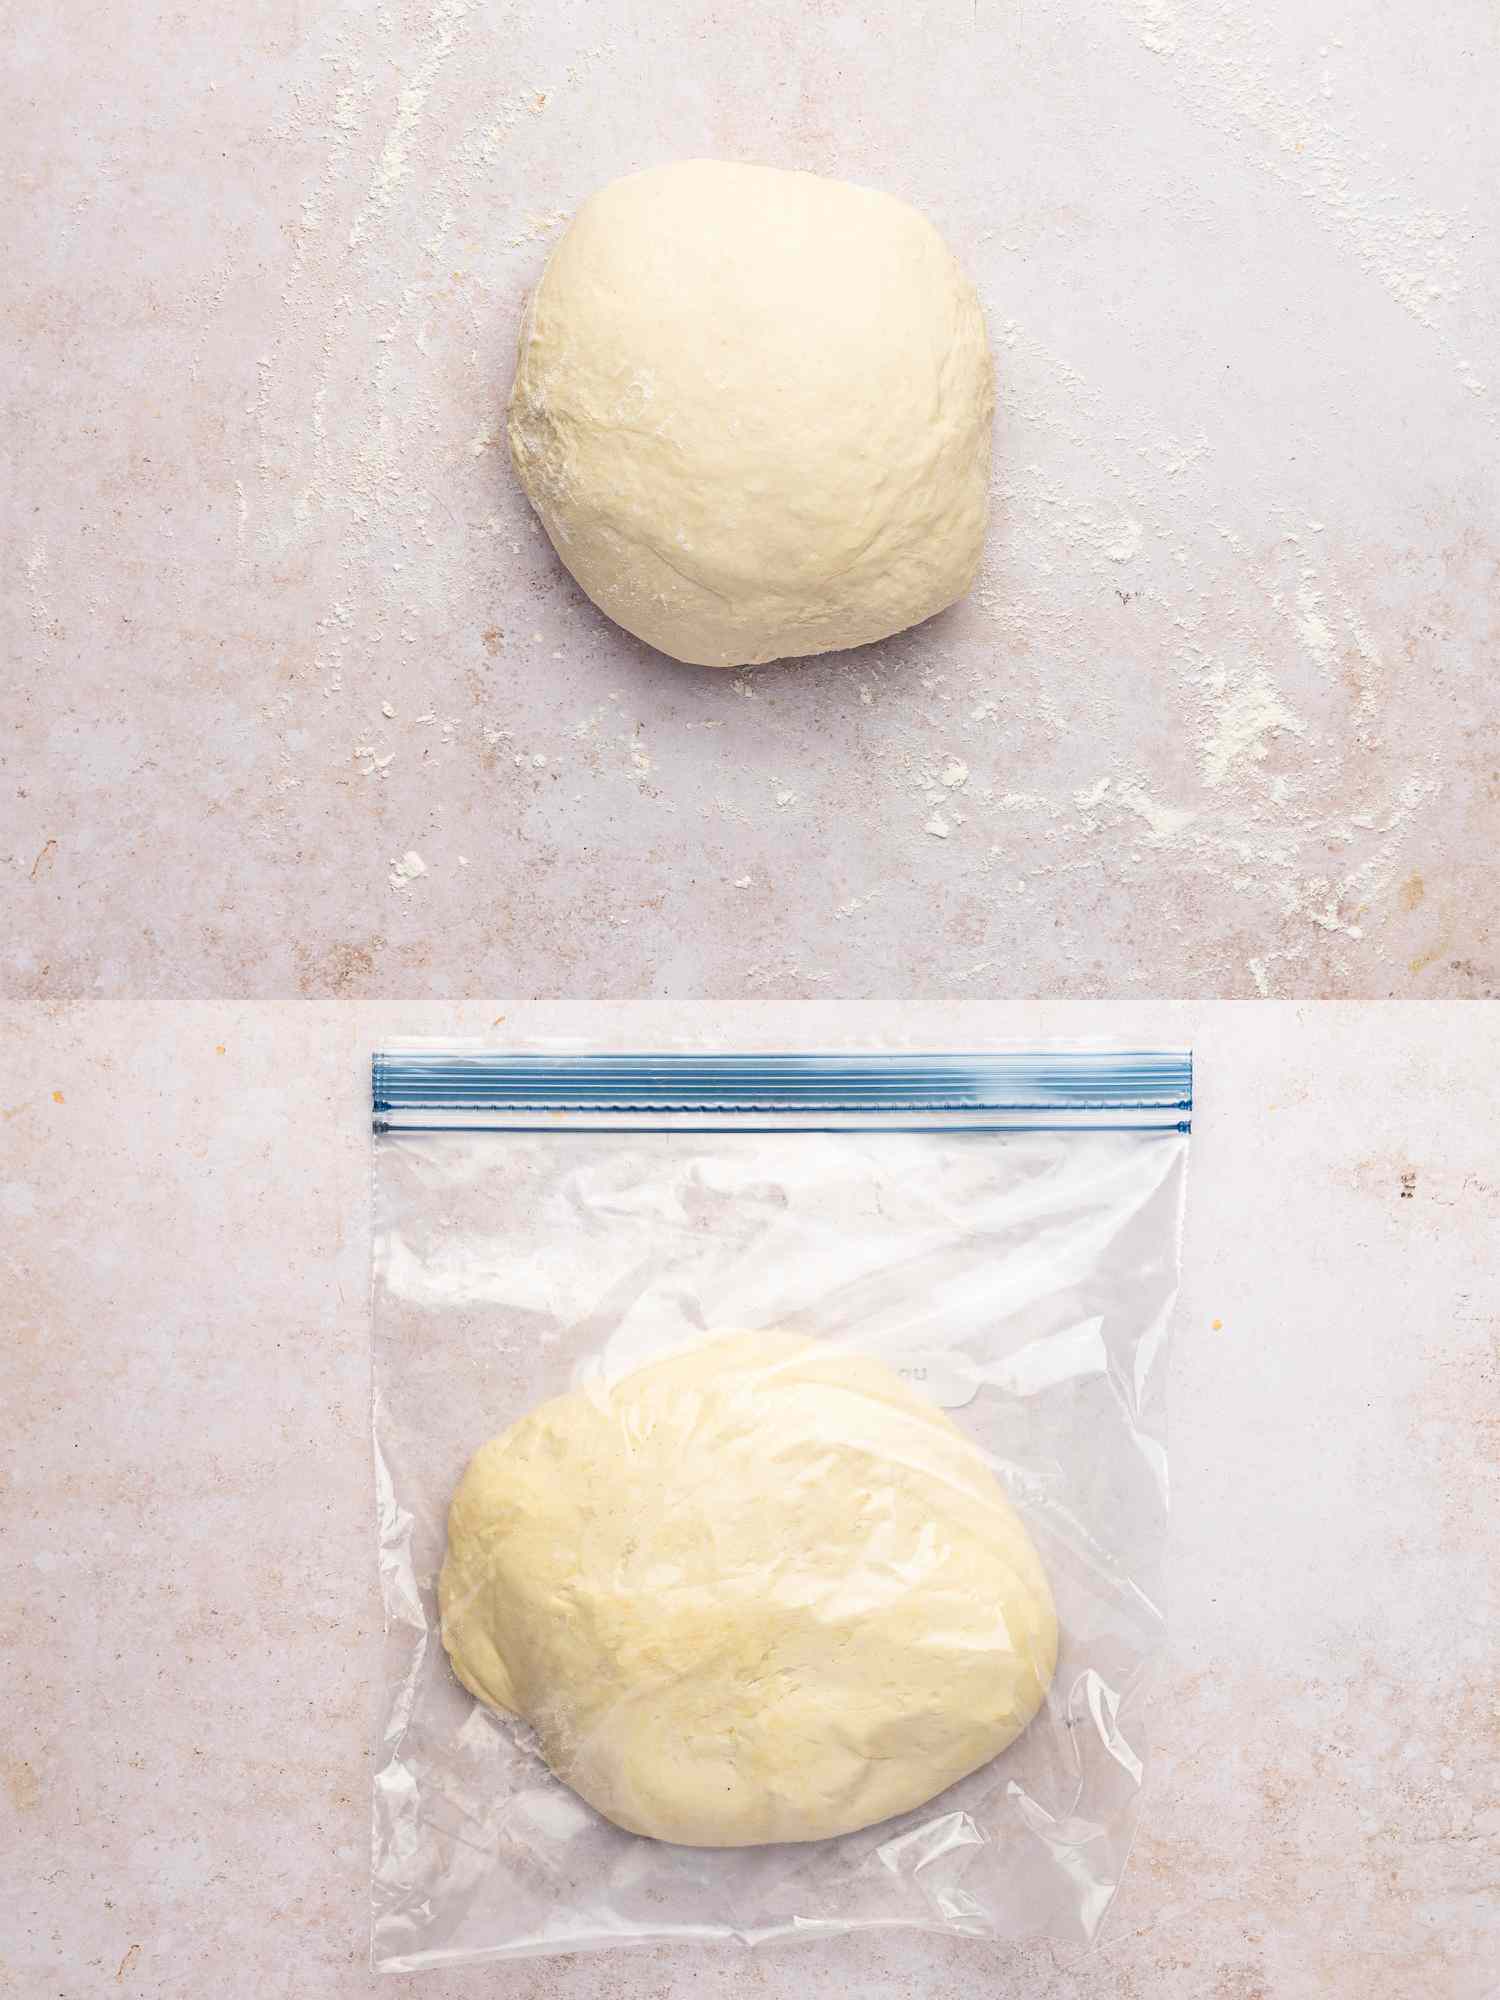 Ball of dough transferred to a gallon-sized zipper lock bag